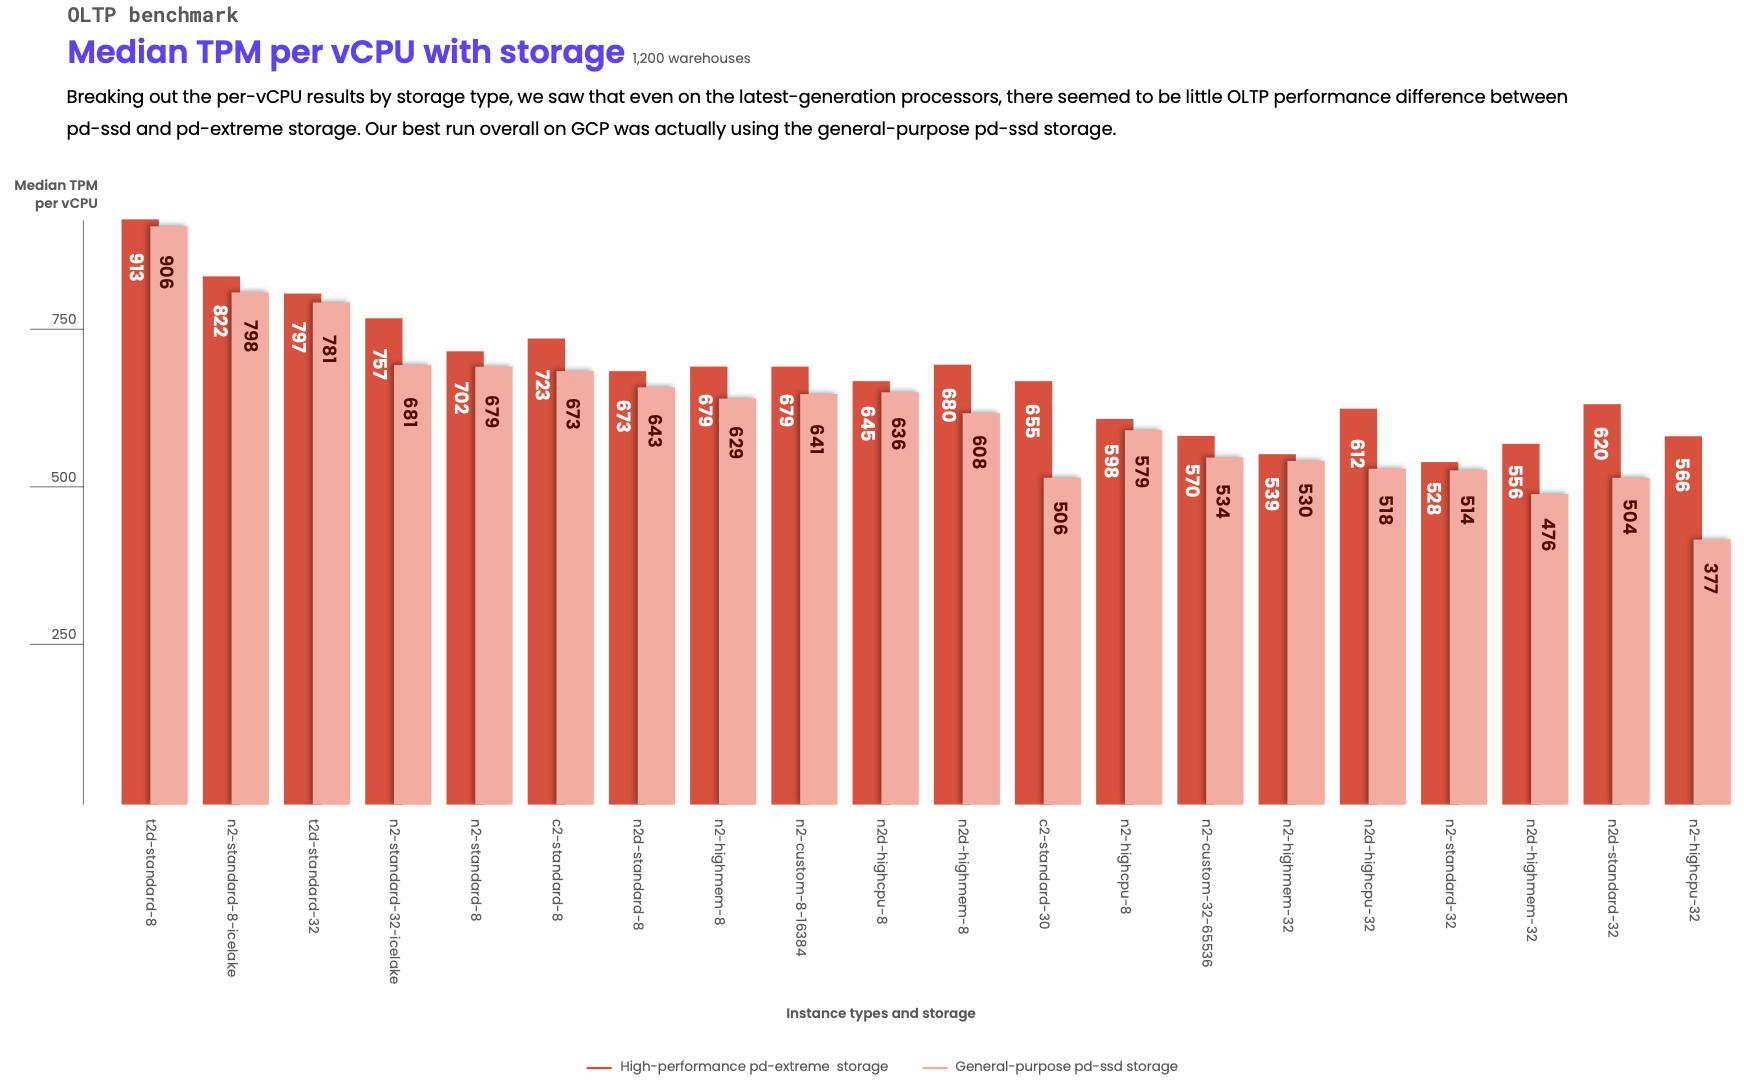 Median tpm per vcpu with storage, gcp